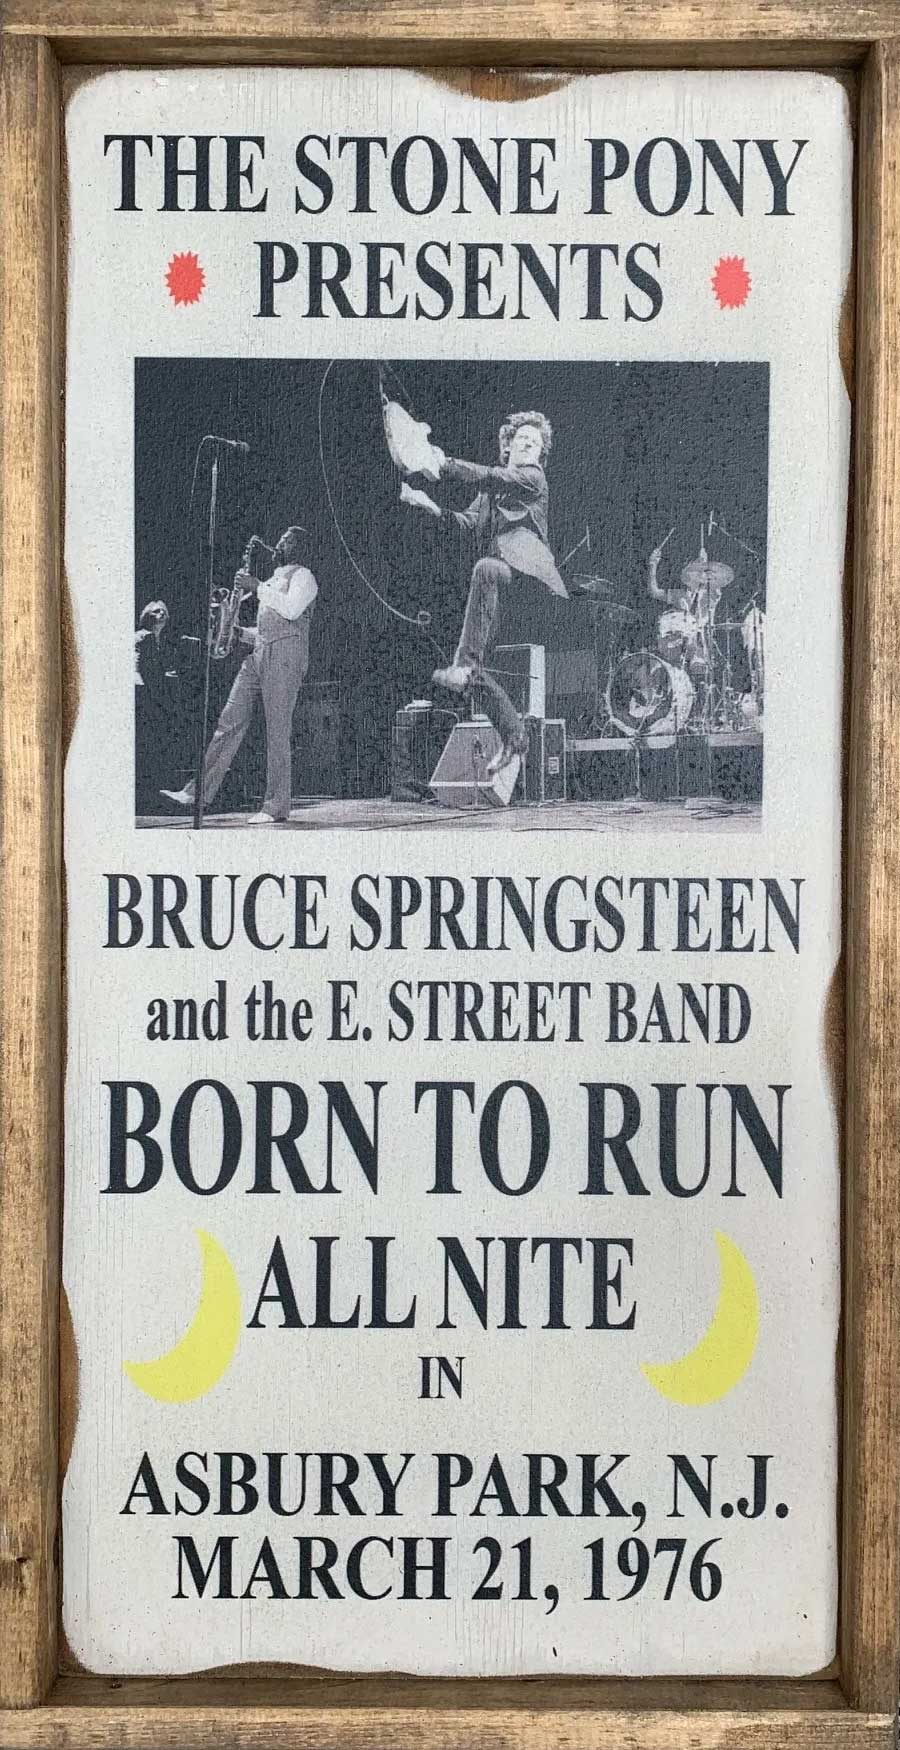 Springsteen at The Stony Pony vintage ad